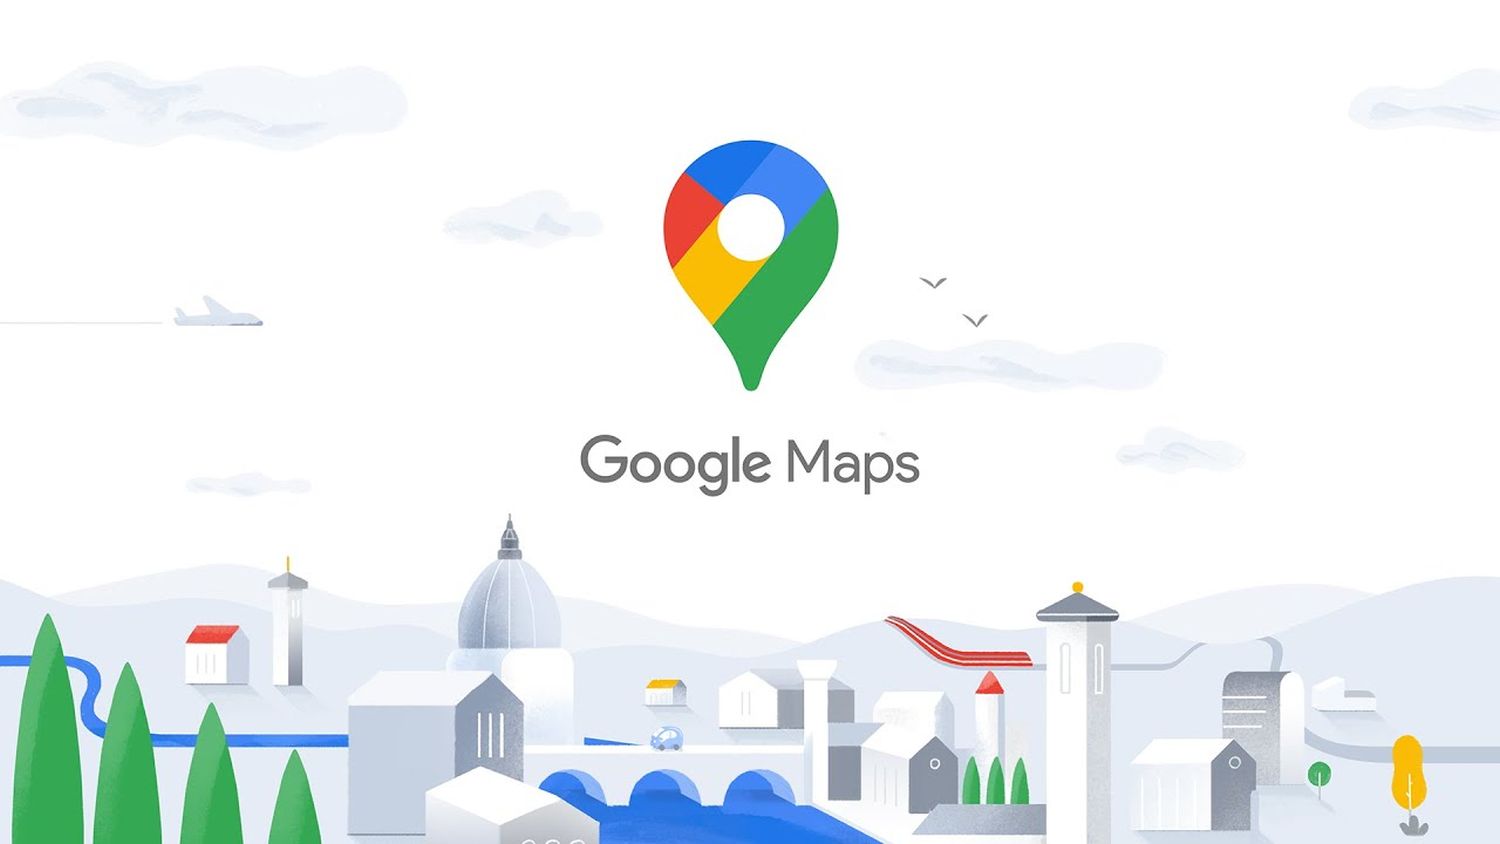 Big Google Maps logo